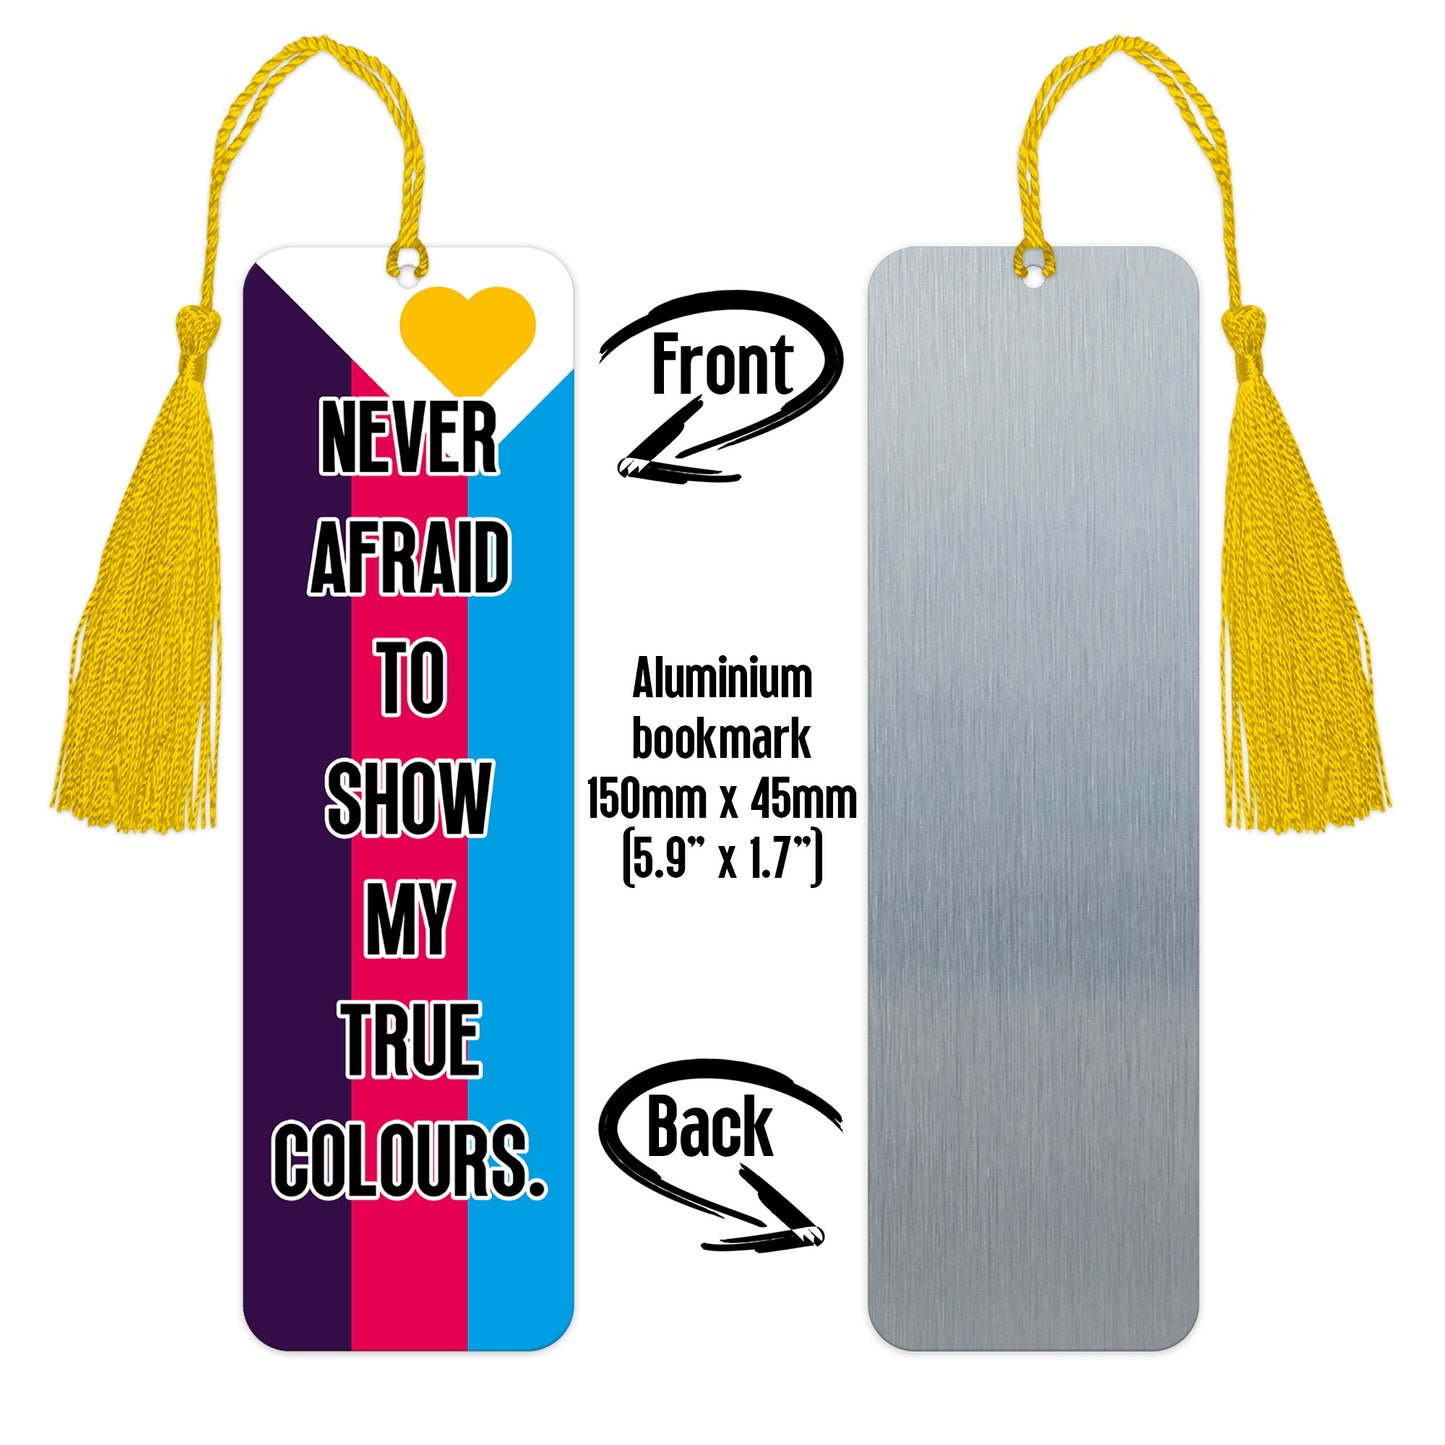 Polyamorous pride luxury aluminium bookmark never afraid to show my true colours